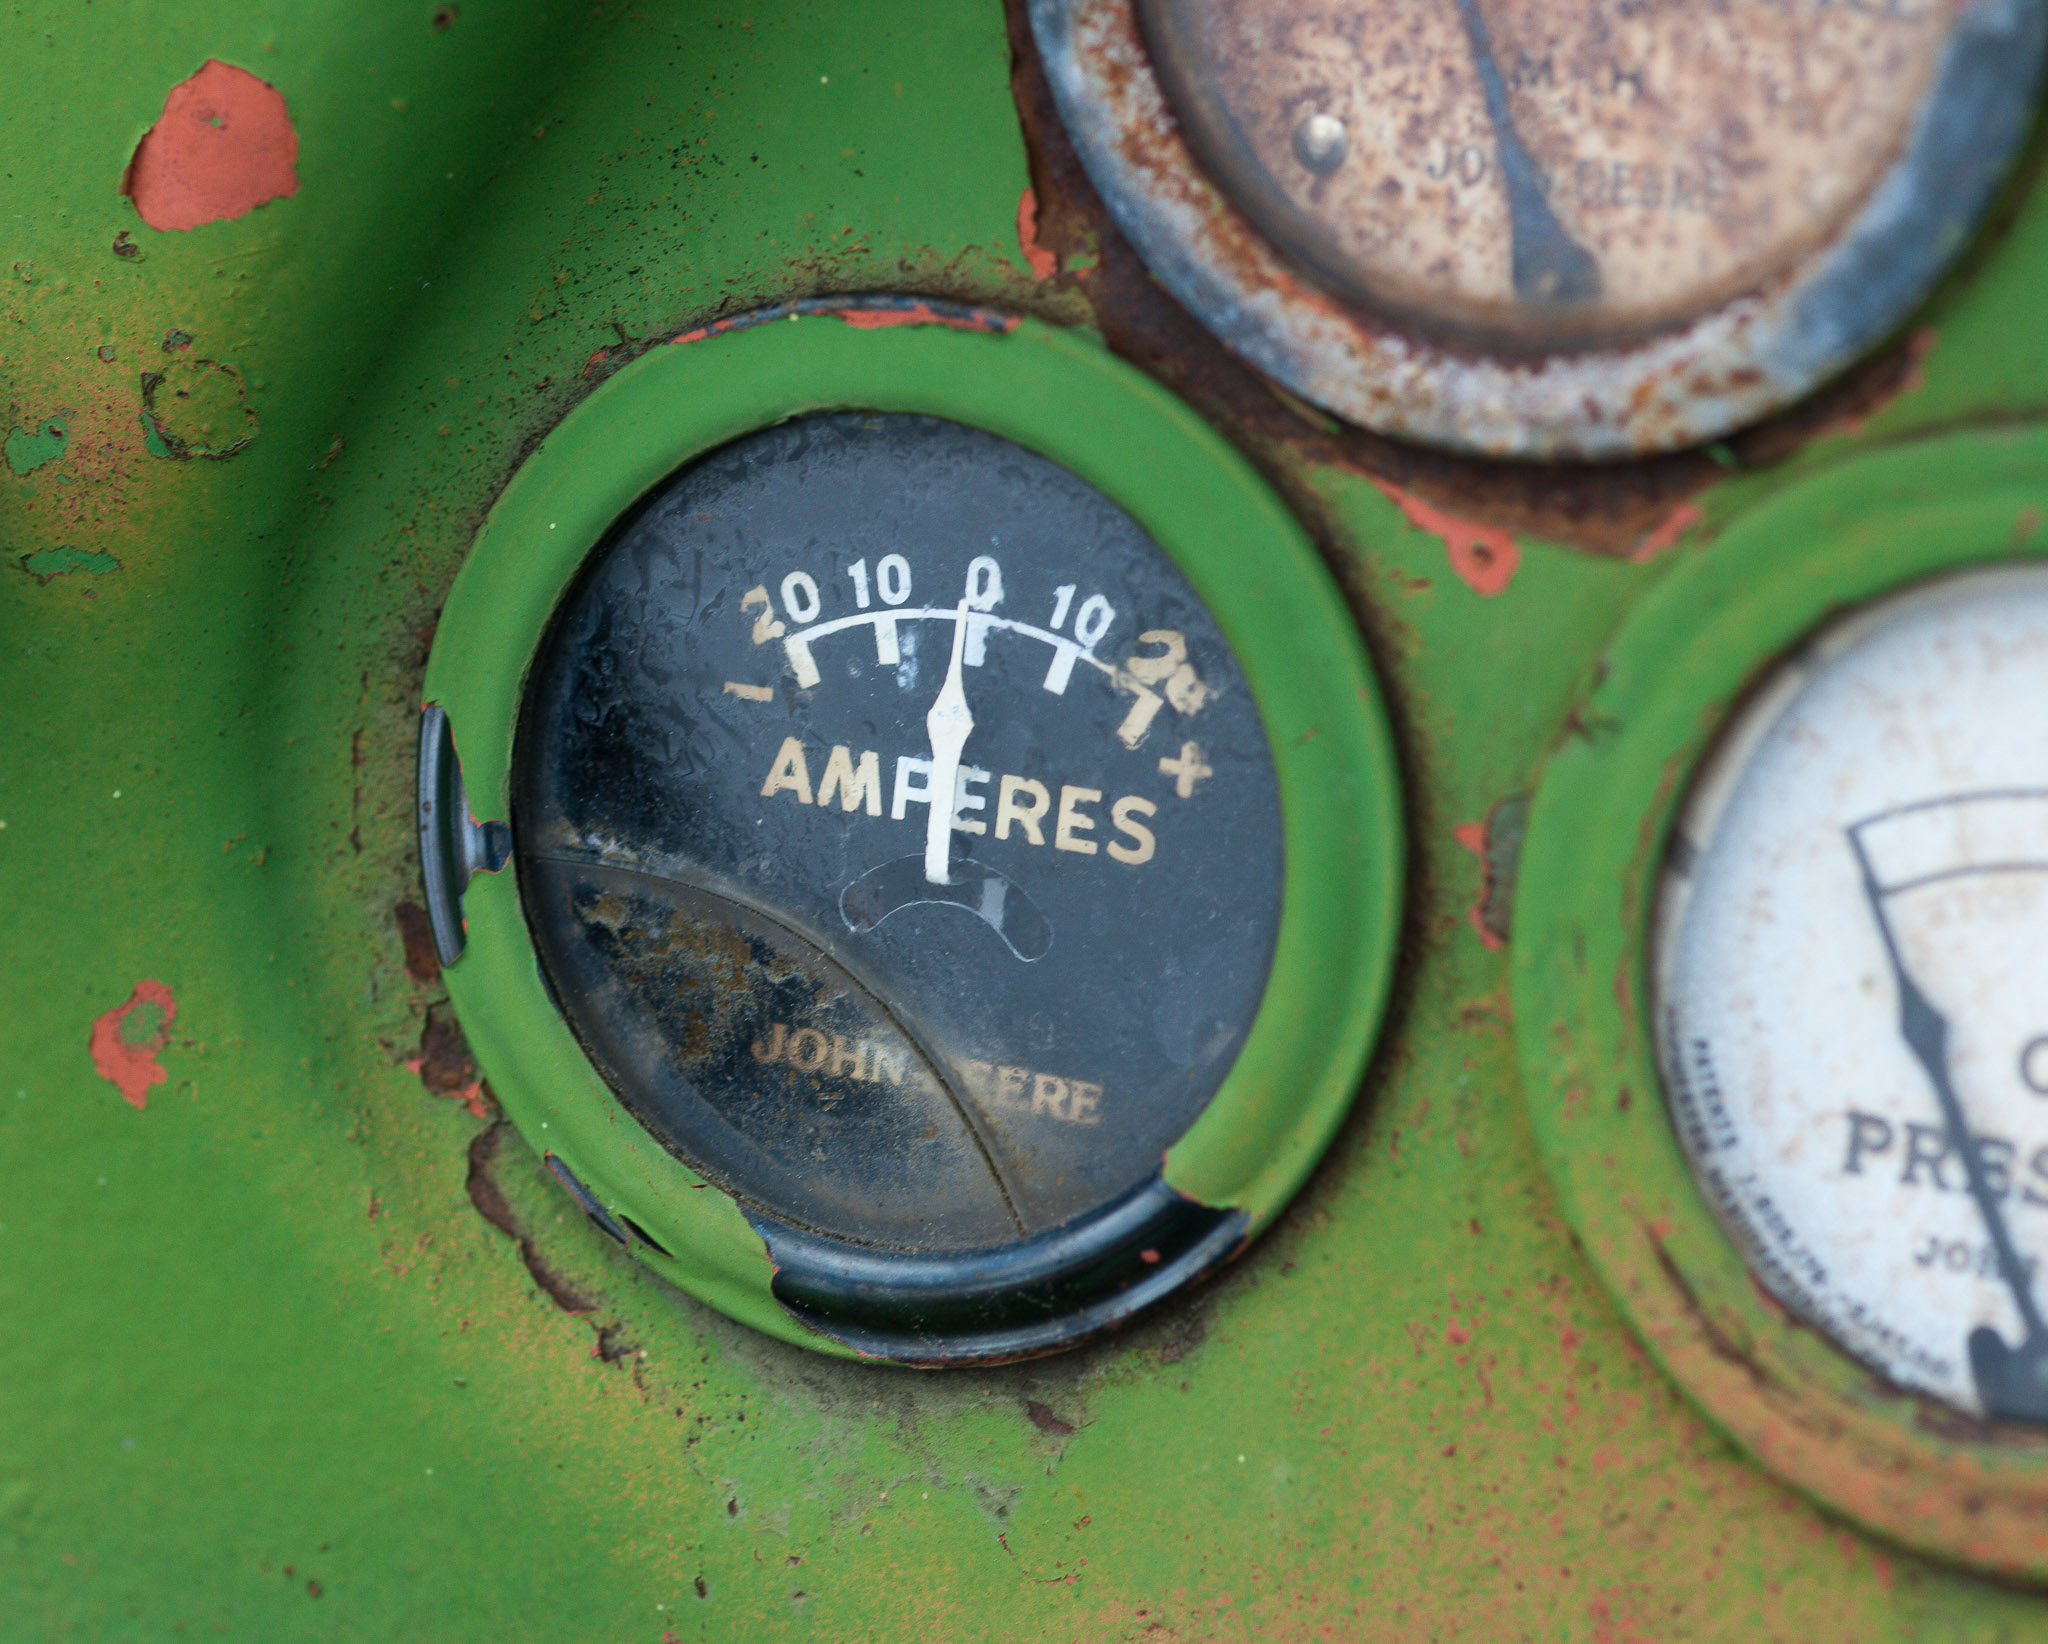 Derelict tractor detail between Palouse & Potlatch